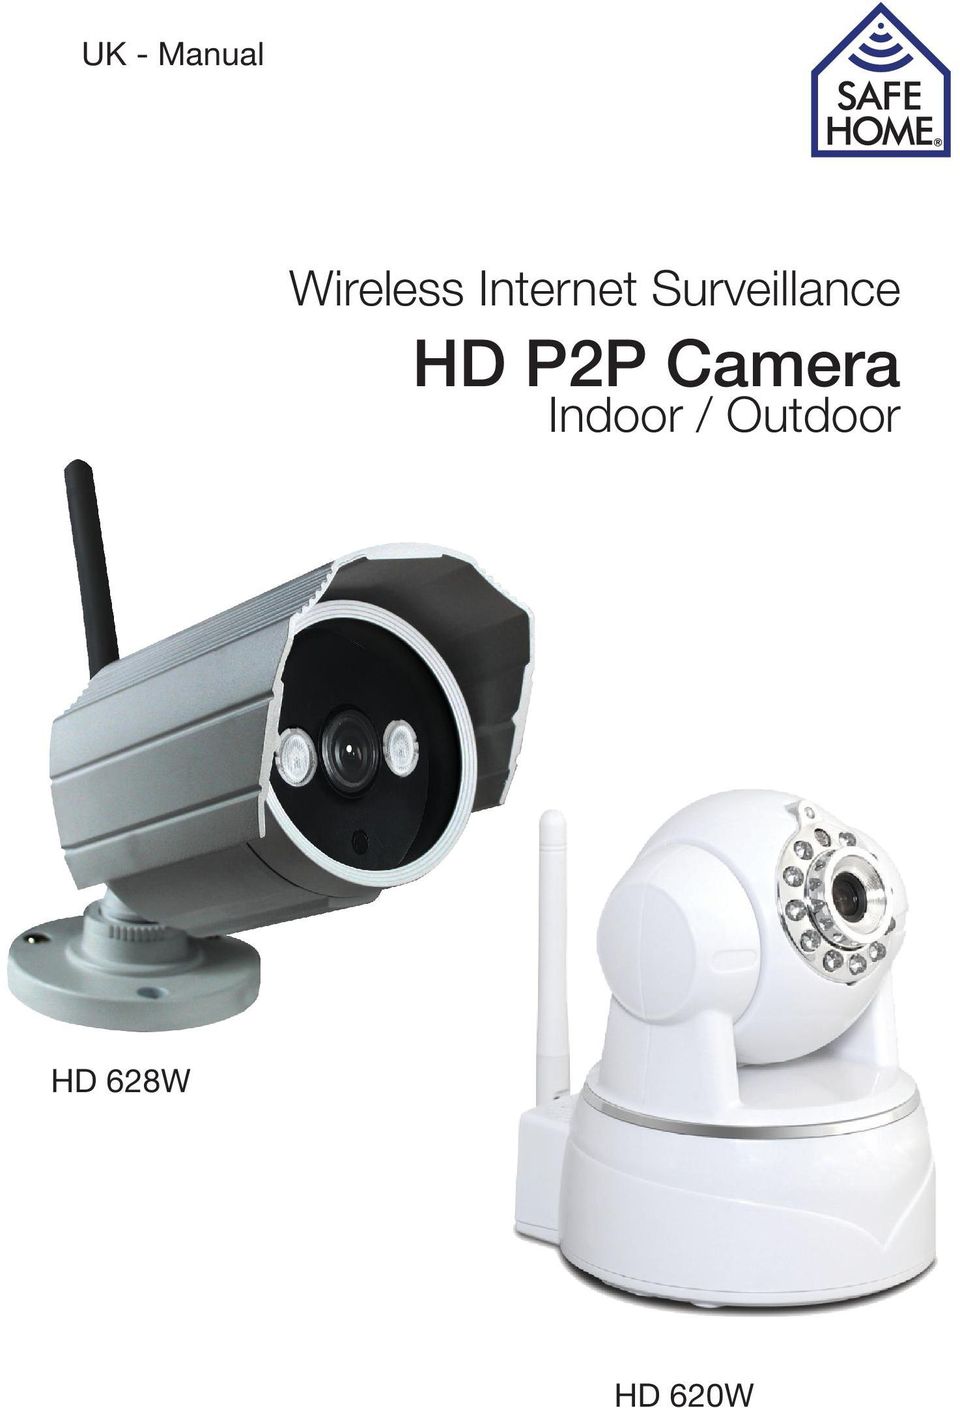 HD P2P Camera Indoor /